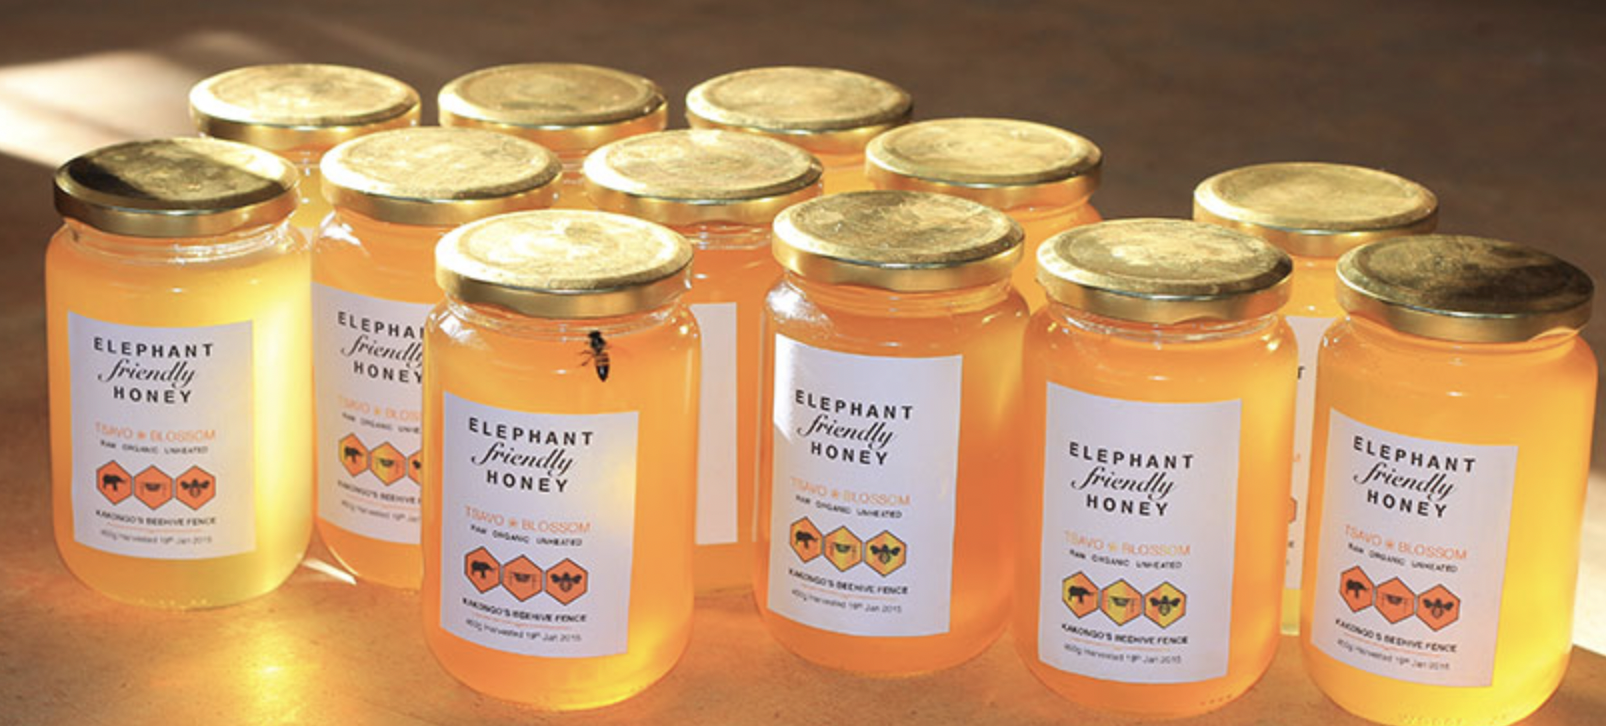 Elephant-Friendly Honey